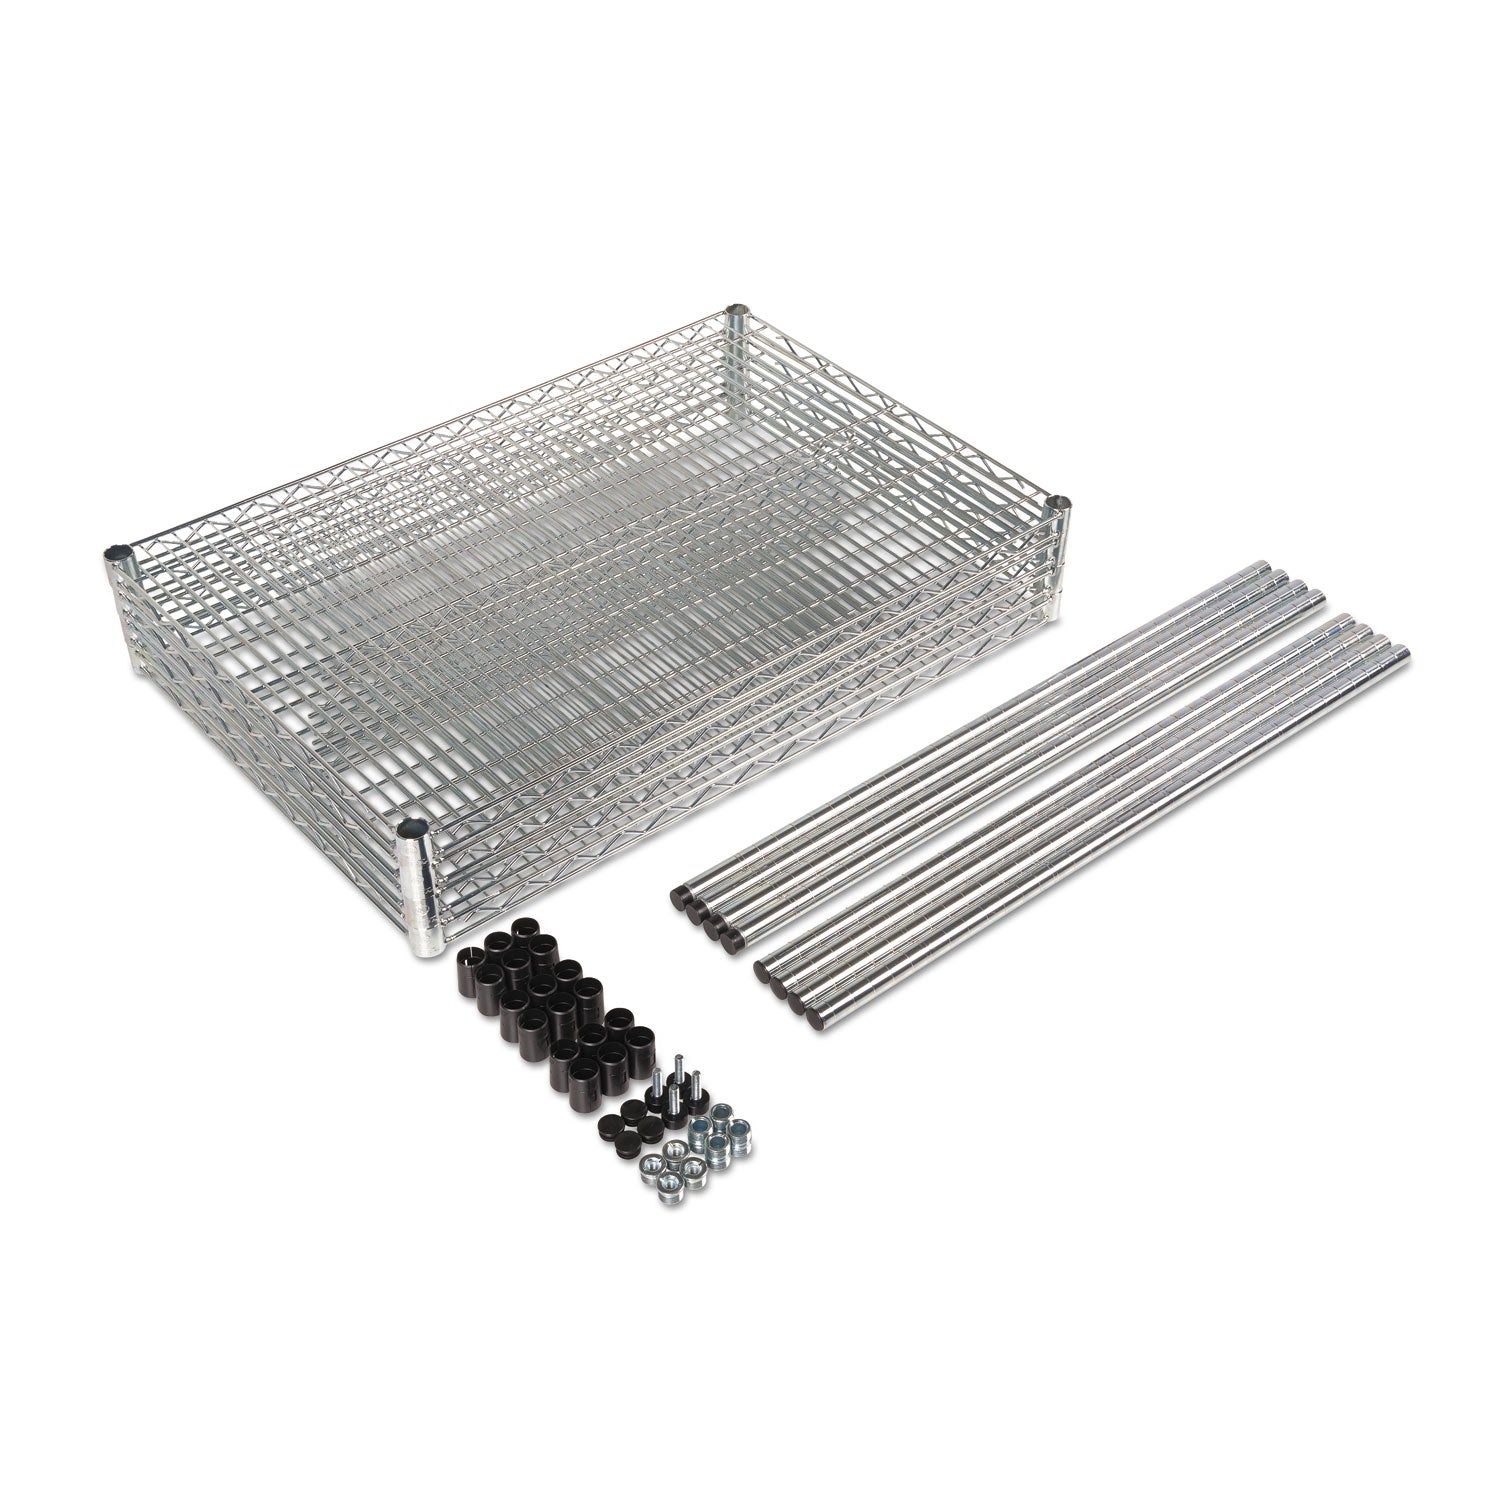 NSF Certified Industrial Four-Shelf Wire Shelving Kit, 36w x 18d x 72h, Silver - 